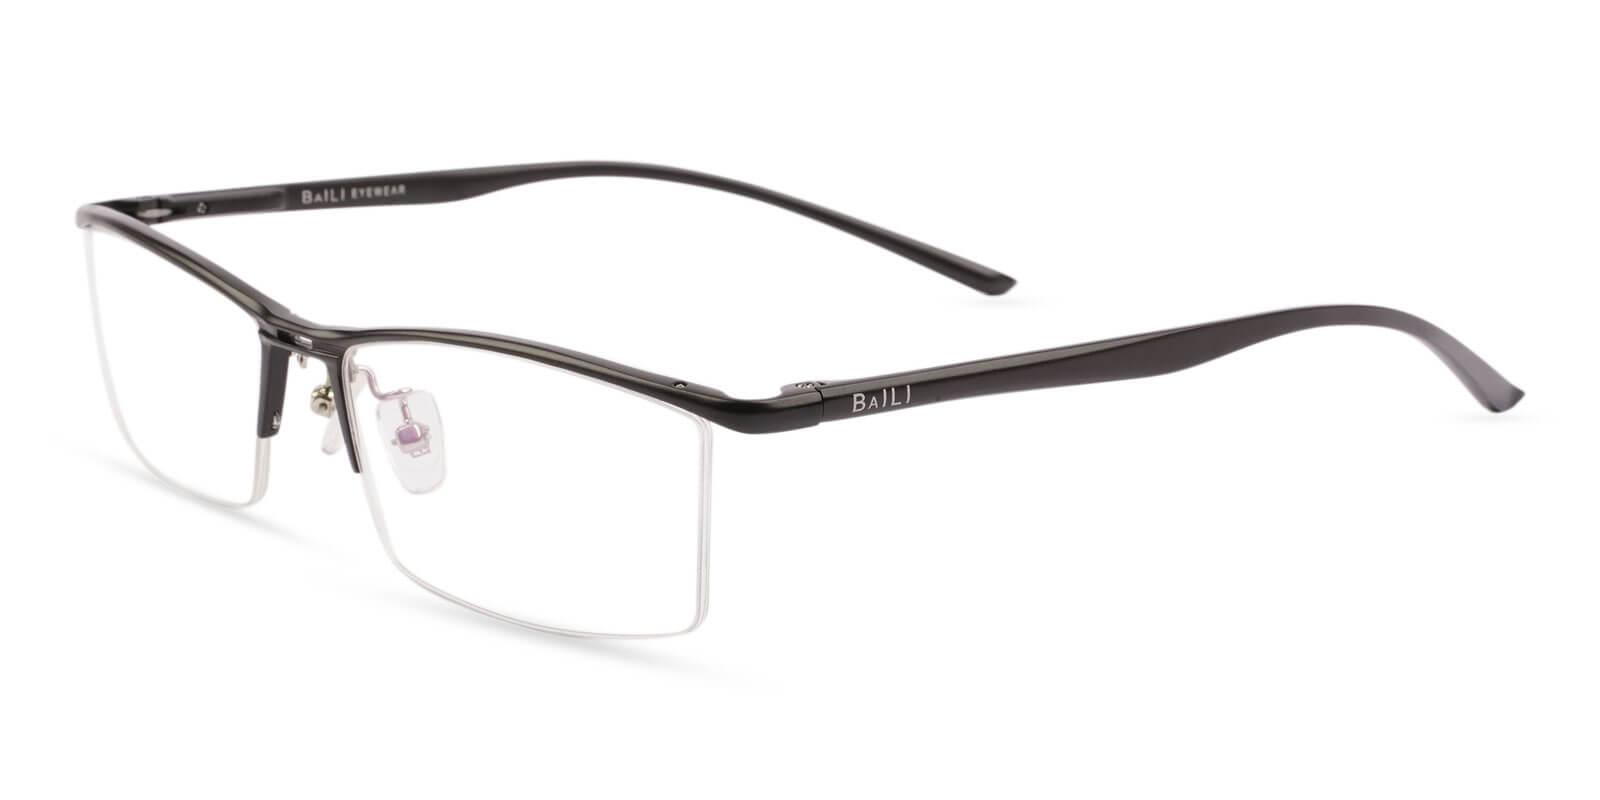 Mateo Black Metal Eyeglasses , SpringHinges , NosePads Frames from ABBE Glasses